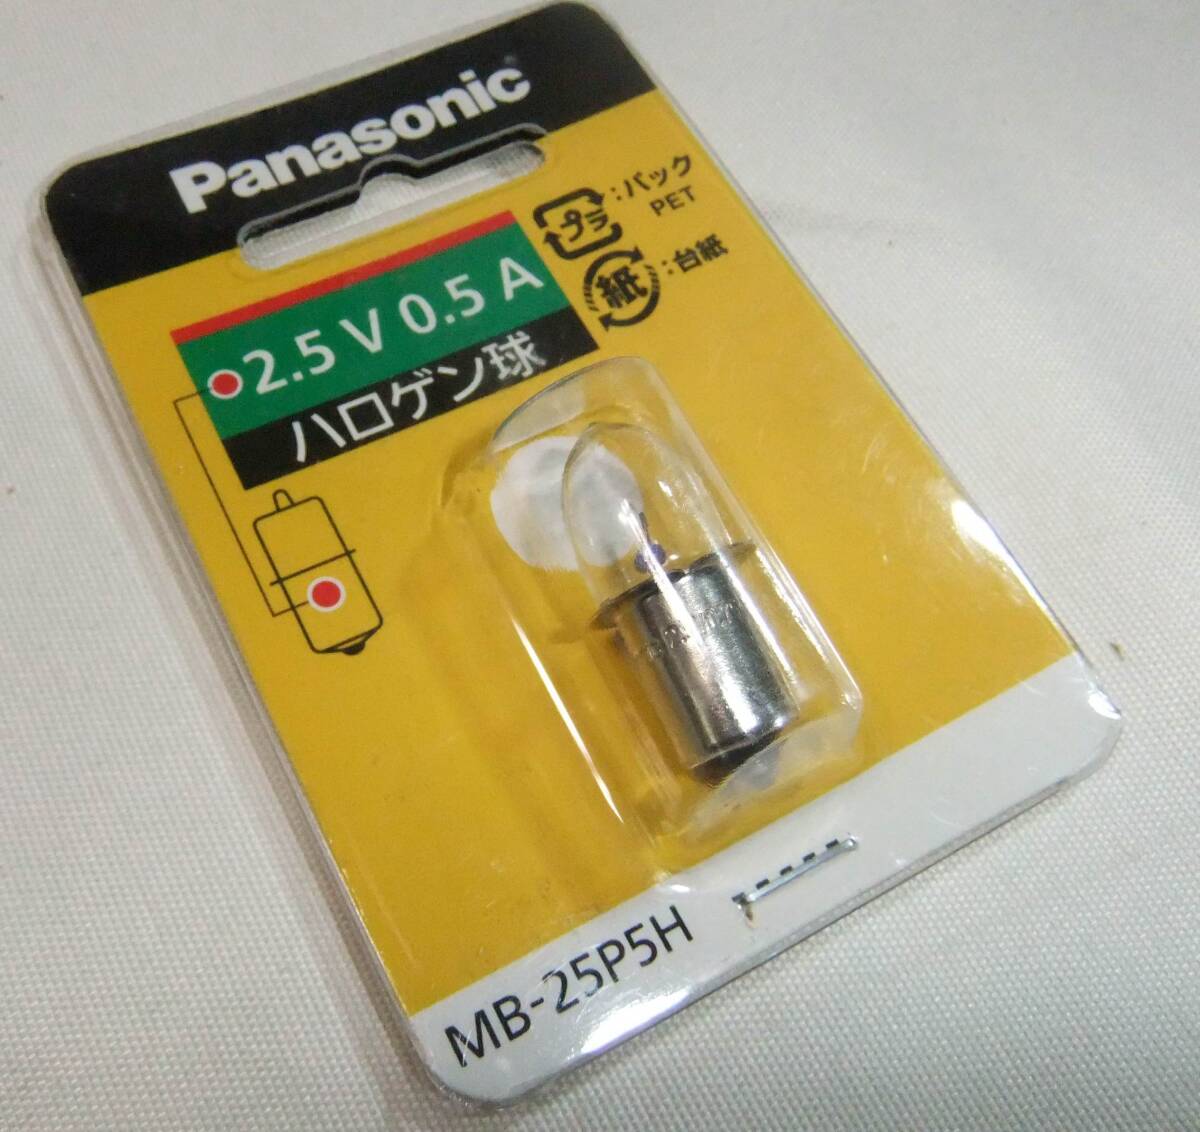 Panasonic / パナソニック / ハロゲン球 / 2.5V 0.5A / サイクルライト交換電球 / 未使用_画像1